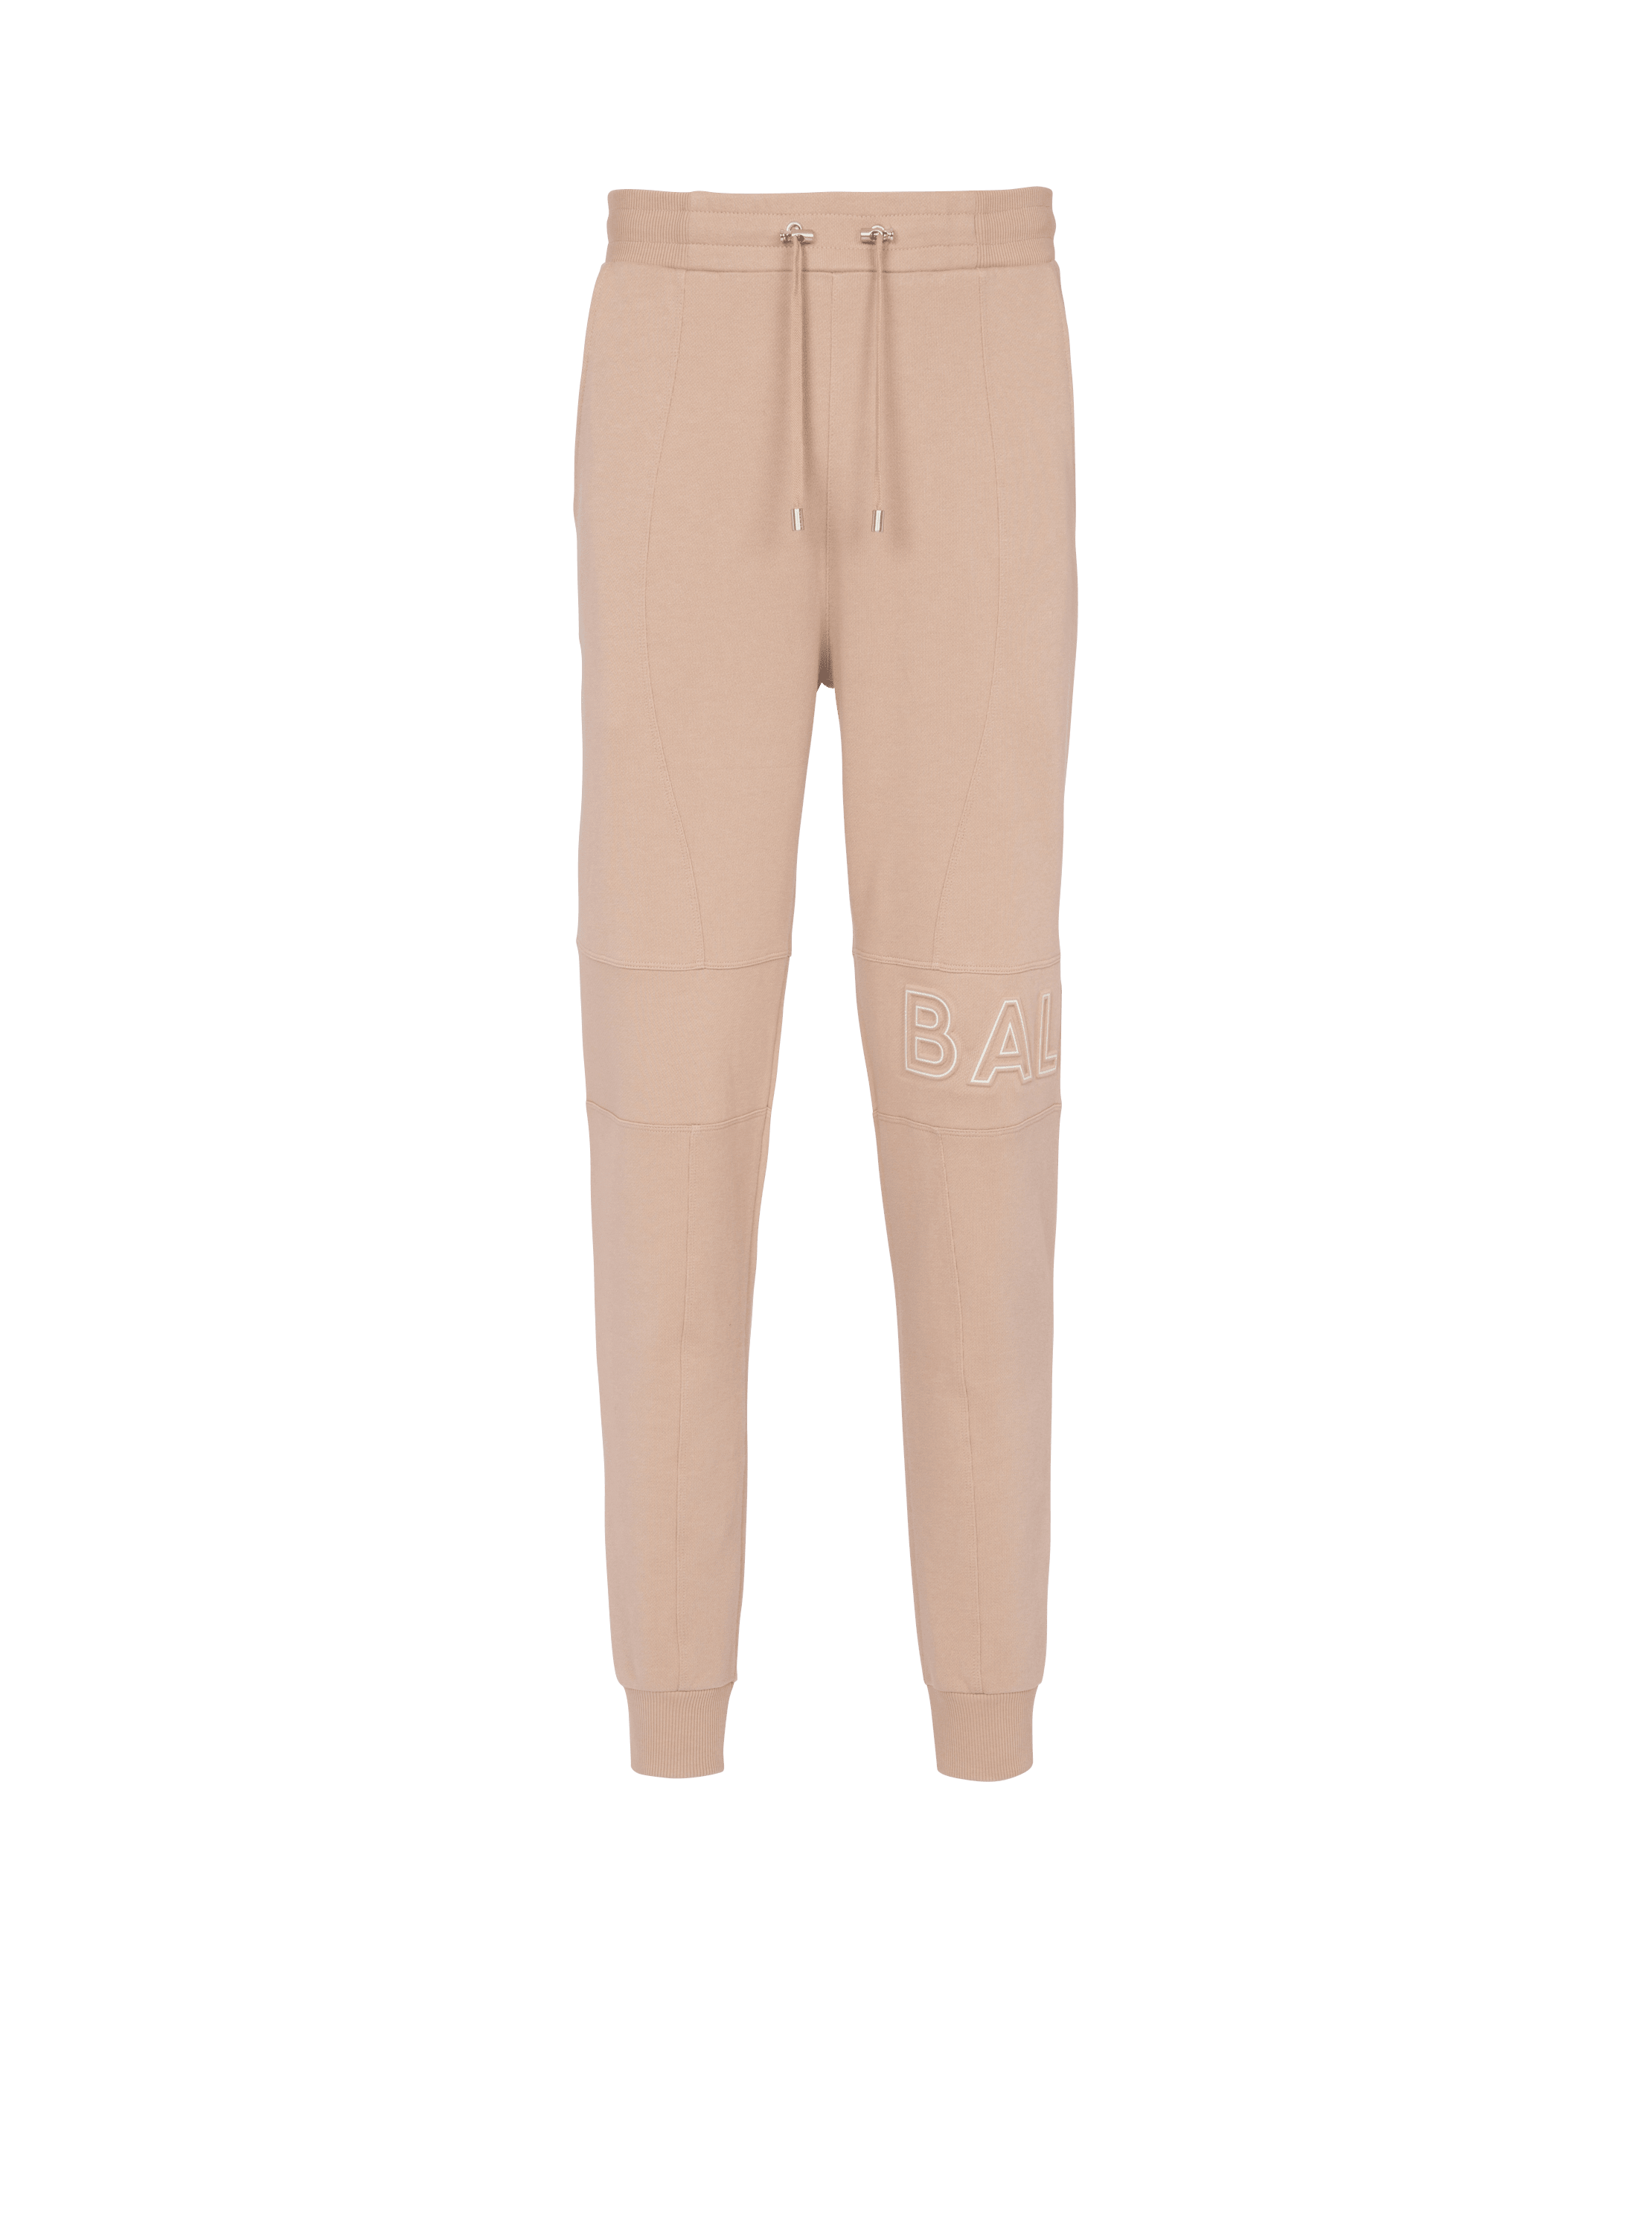 Pantaloni da jogging con logo Balmain in rilievo, beige, hi-res